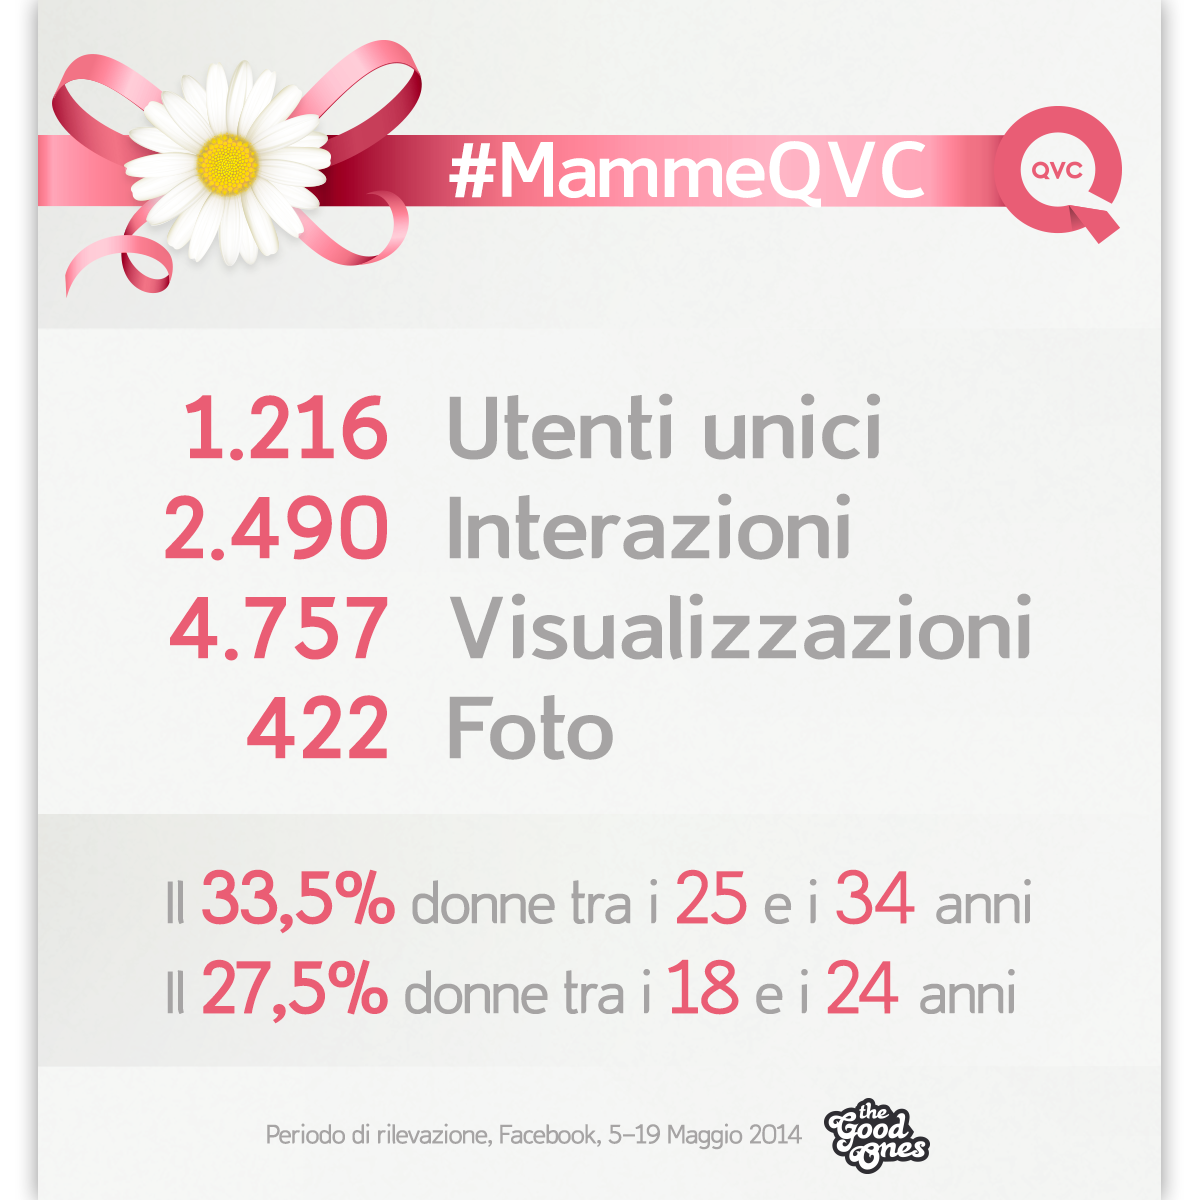 TheGoodOnes, case study: la campagna #MammeQVC per QVC Italia